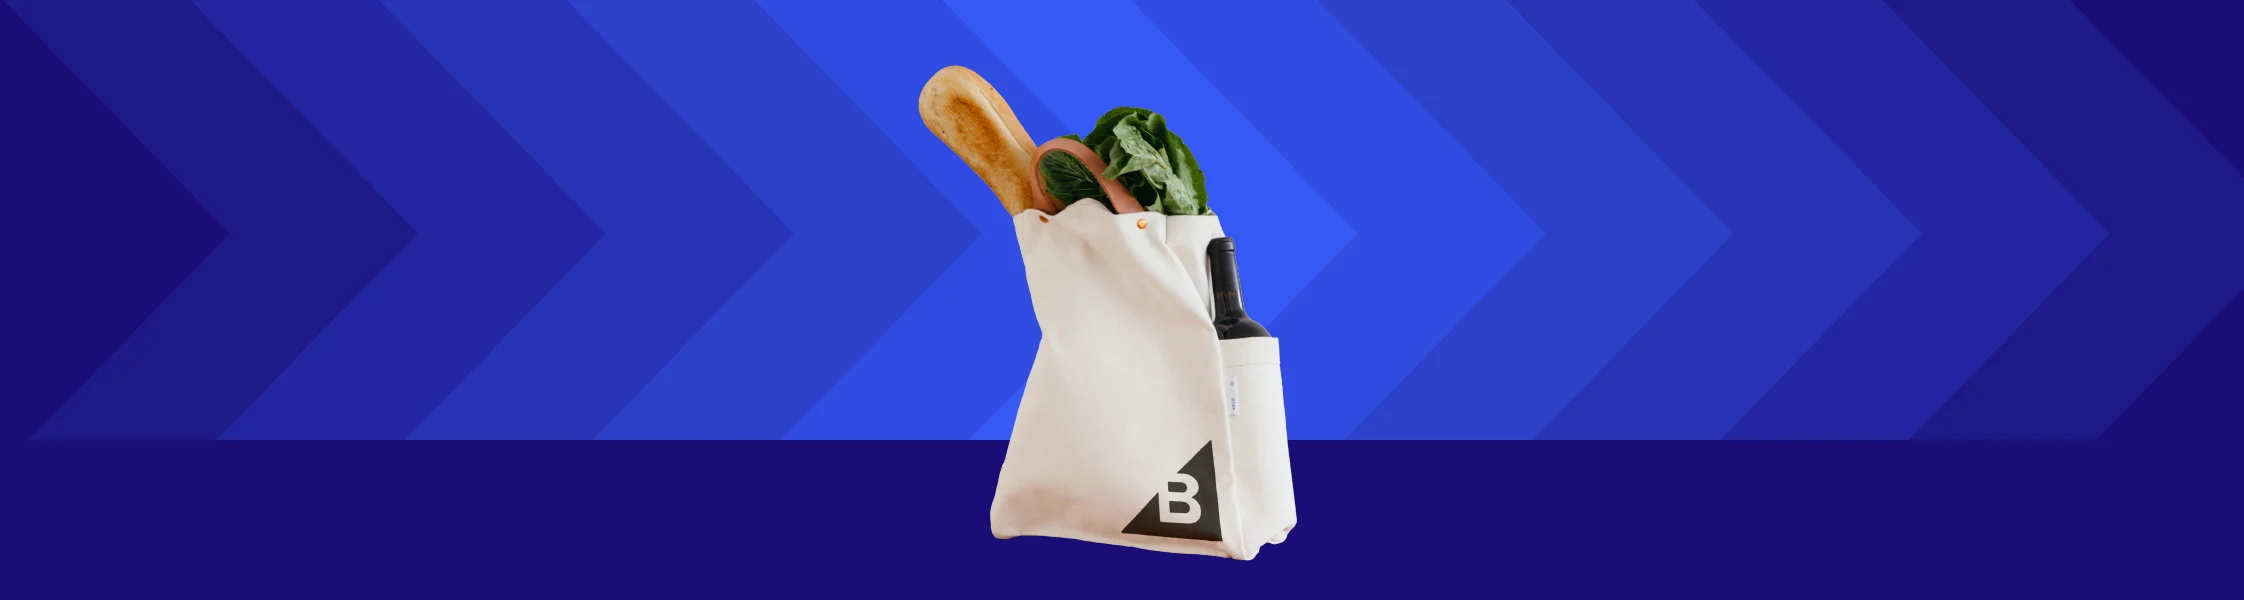 https://cms-wp.bigcommerce.com/wp-content/uploads/2022/10/article-header-grocery-bag-arrow-.jpg